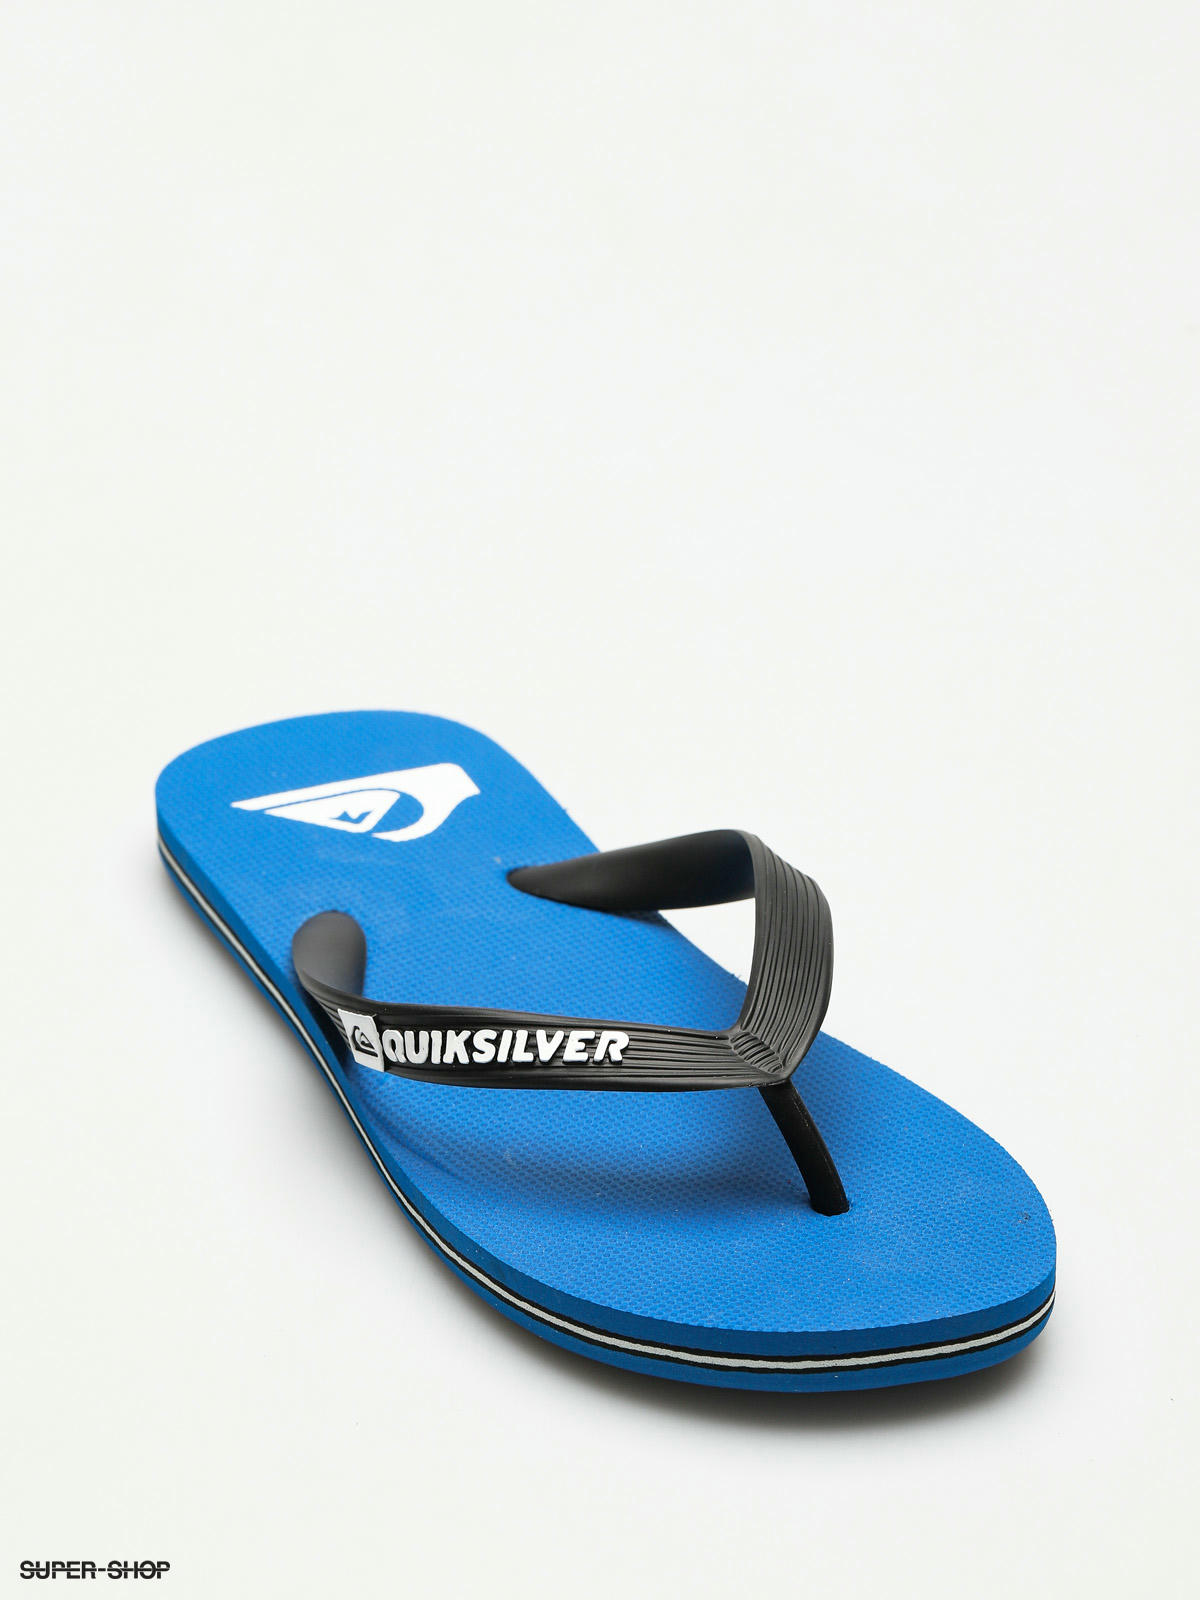 Quiksilver 'Little Molokai' Flip Flop Style Sandals UK 2.5 EU 35 Blue Mix BNWT